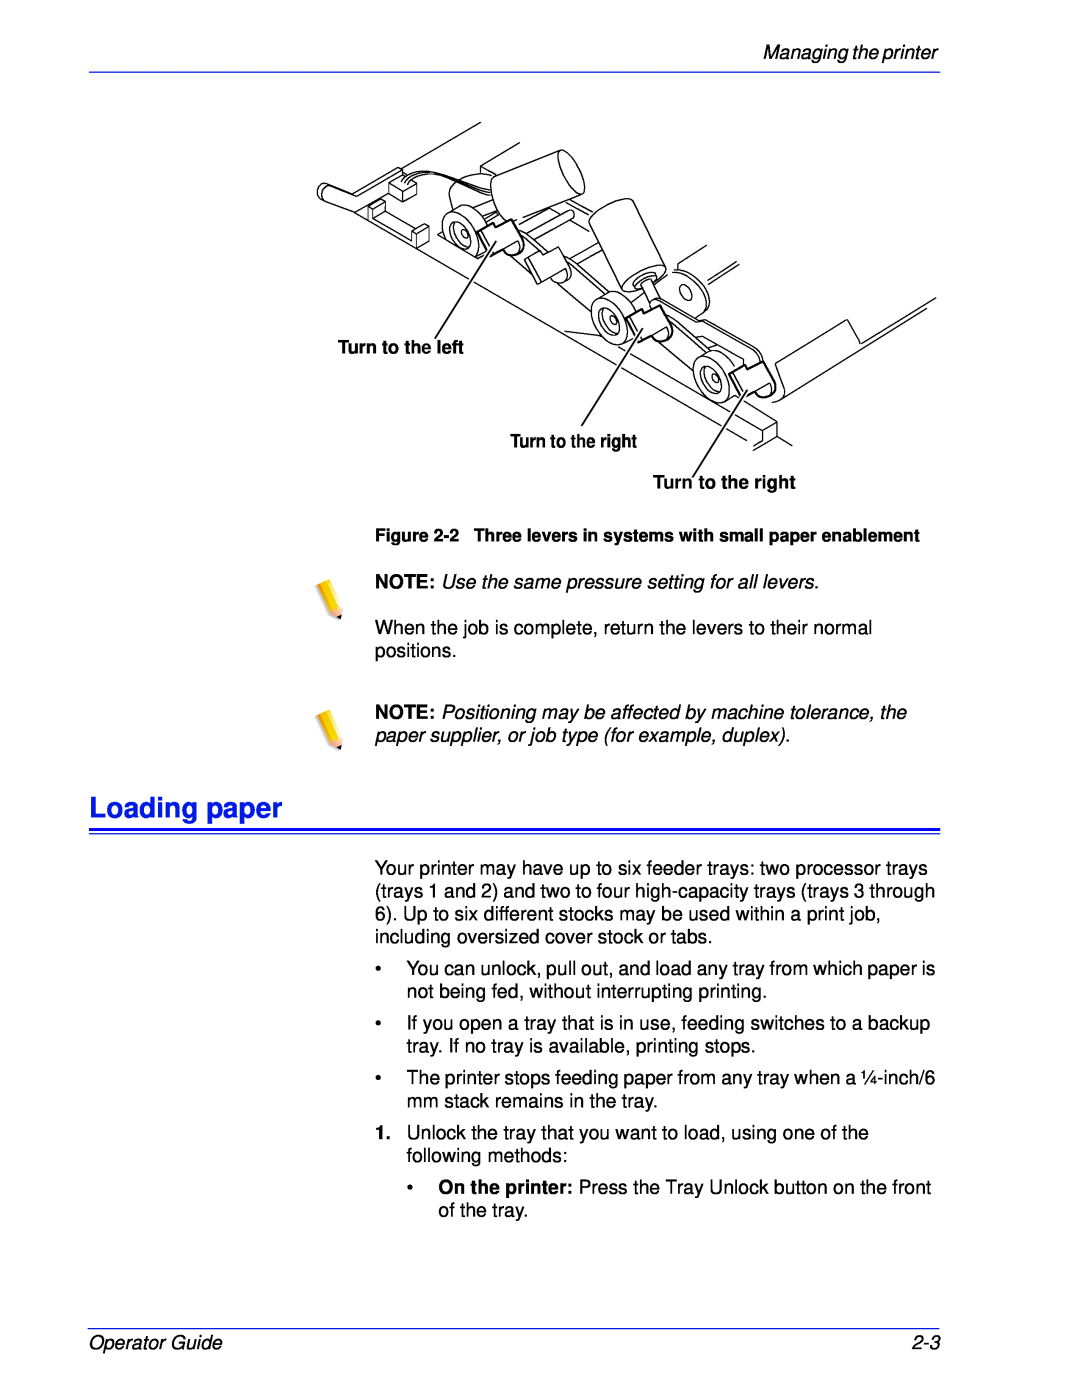 Xerox 180 EPS, 100 manual Loading paper, Managing the printer, Operator Guide 